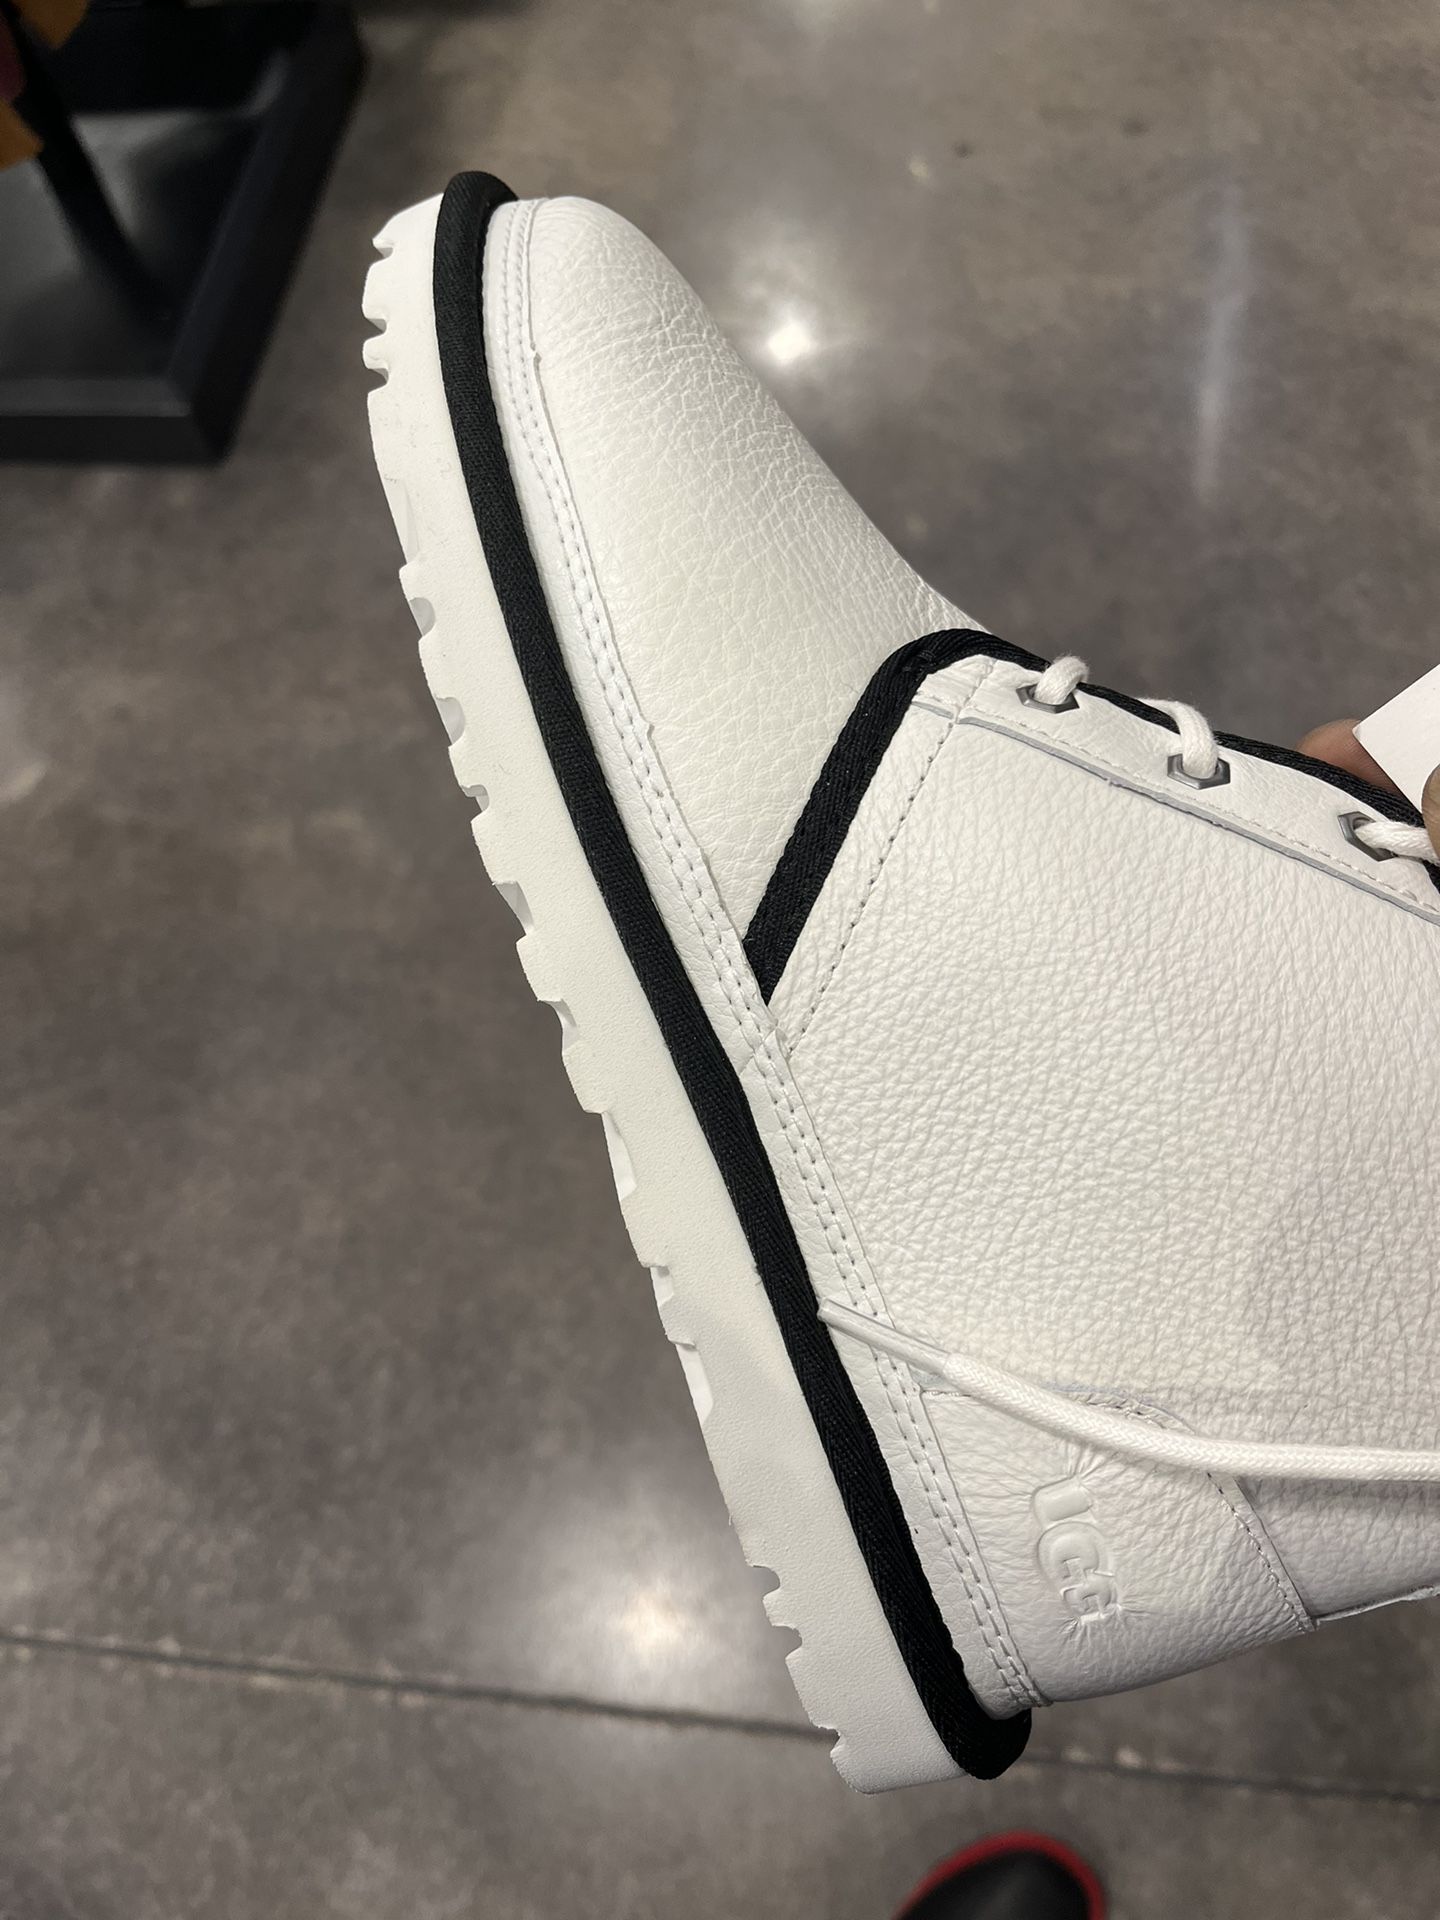 Ugg Boots Brand New All White n Black 120$